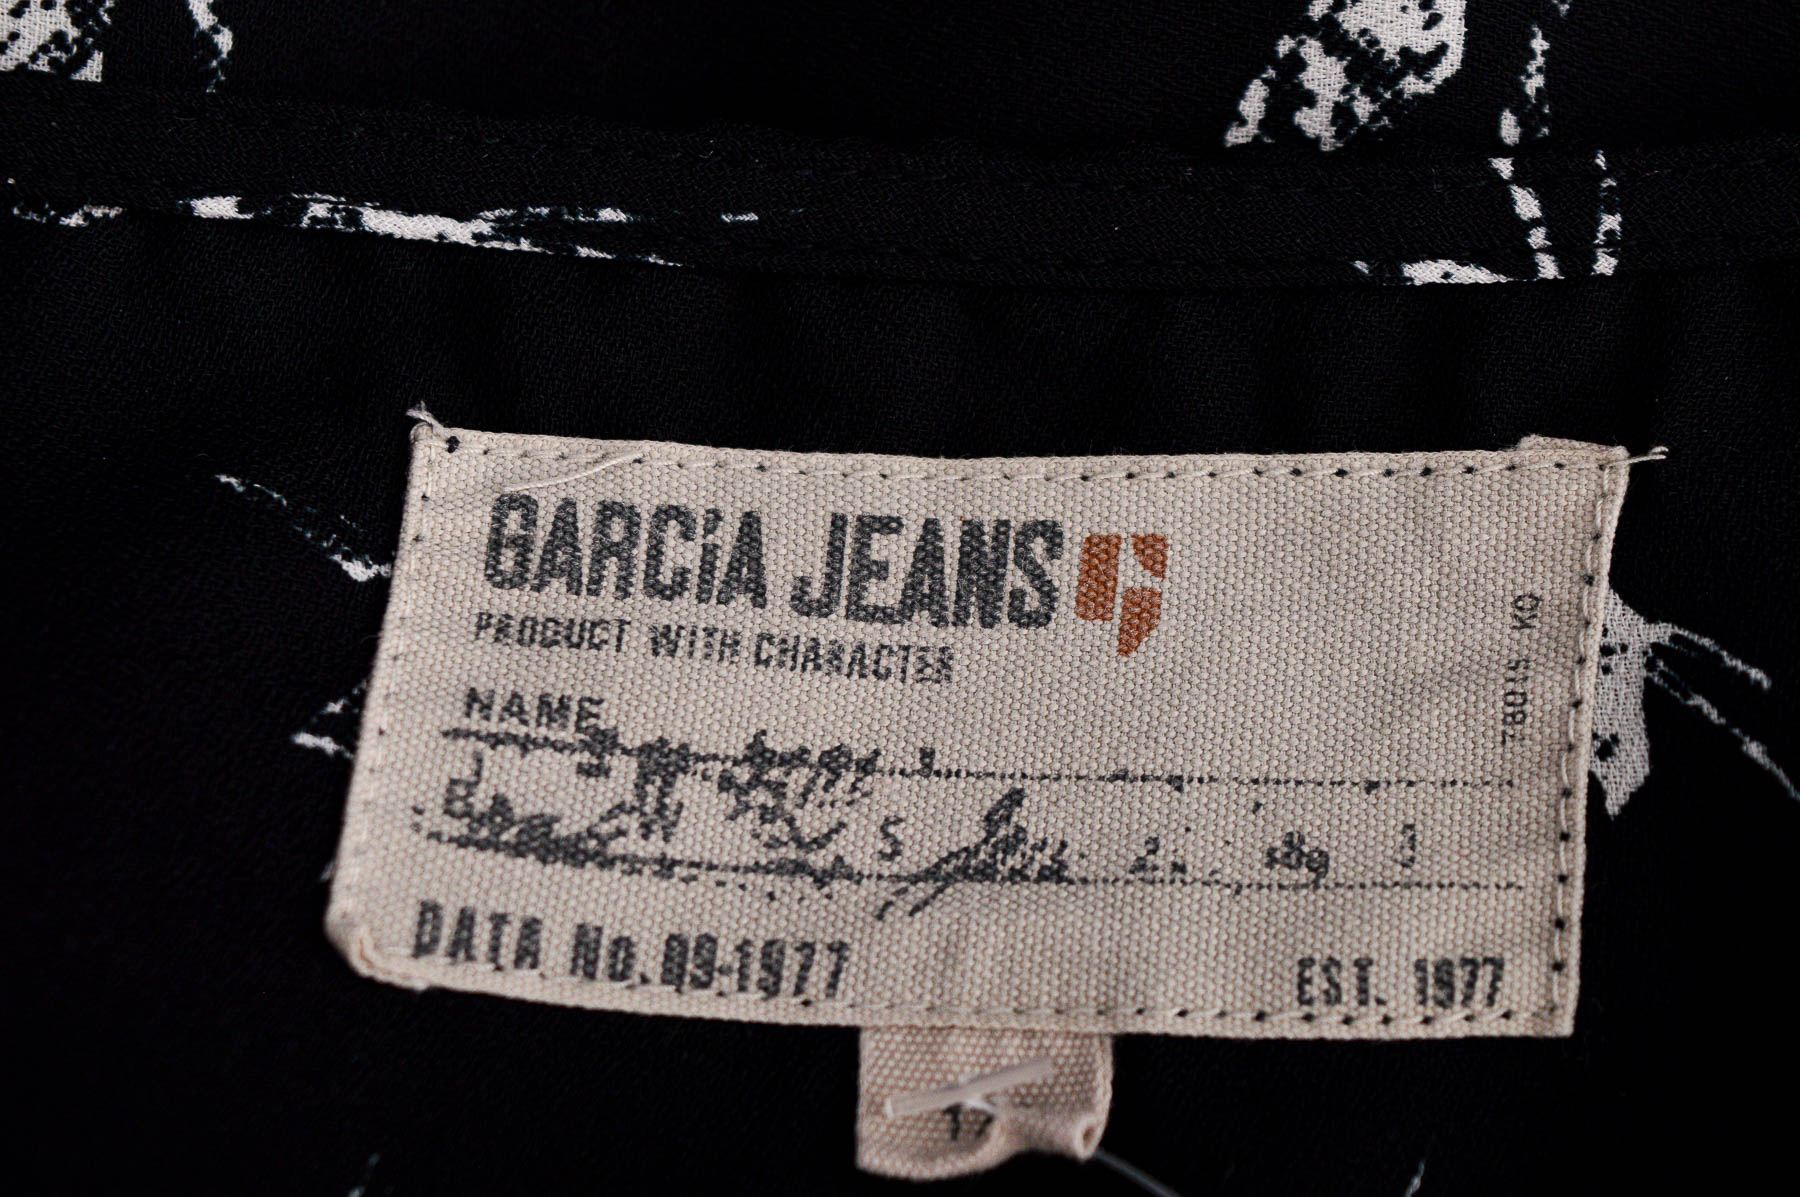 Koszula damska - Garcia Jeans - 2